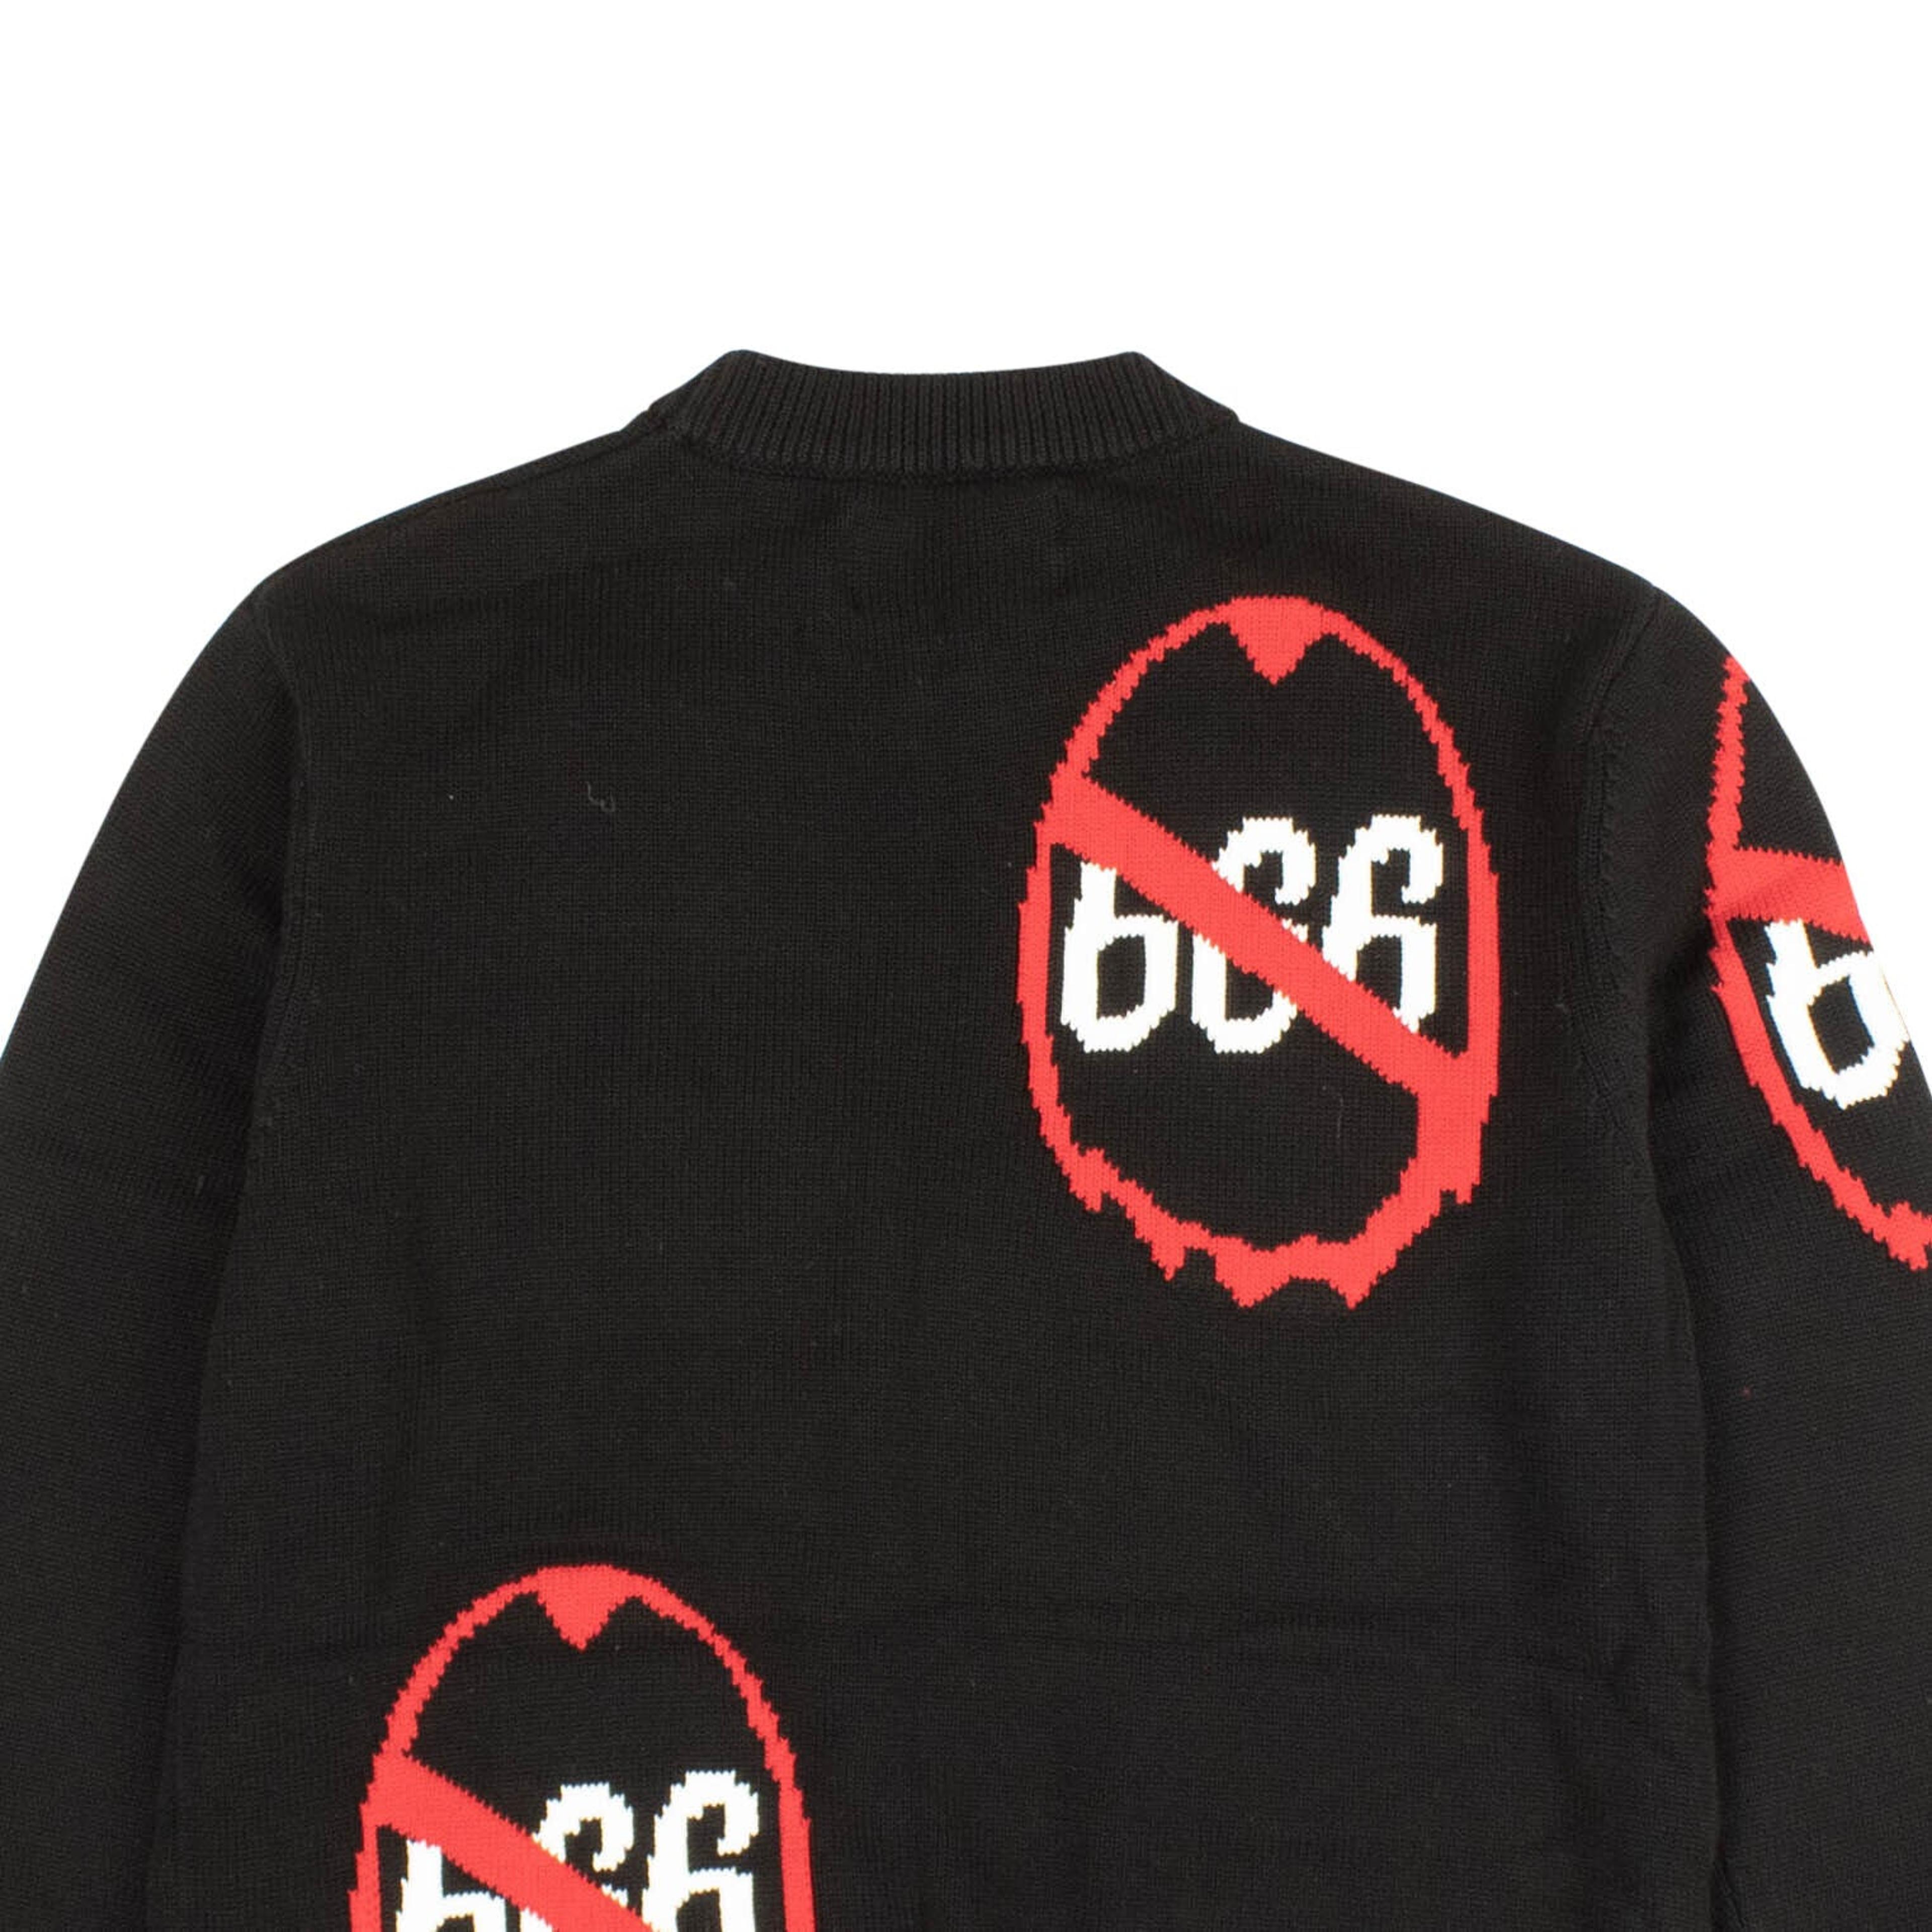 Alternate View 3 of Black Anti 666 Knit Crewneck Sweater